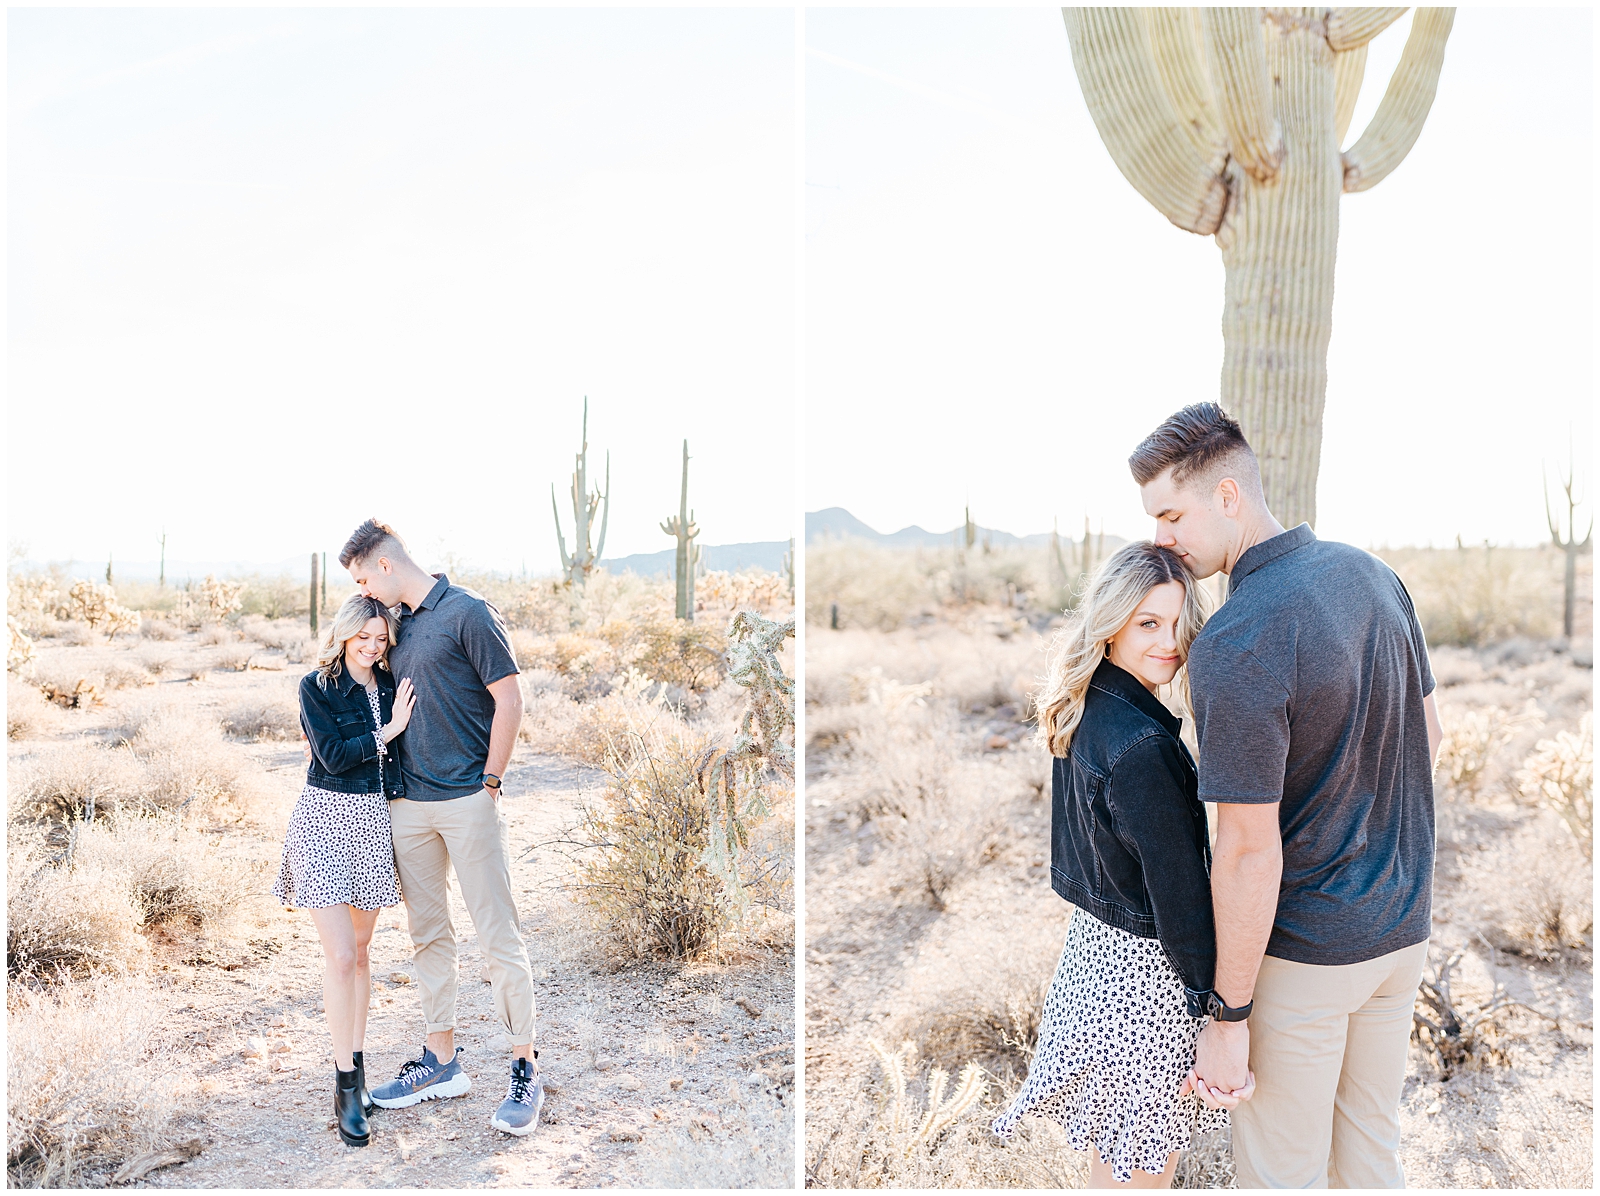 Couple in Arizona Desert - Photo Session